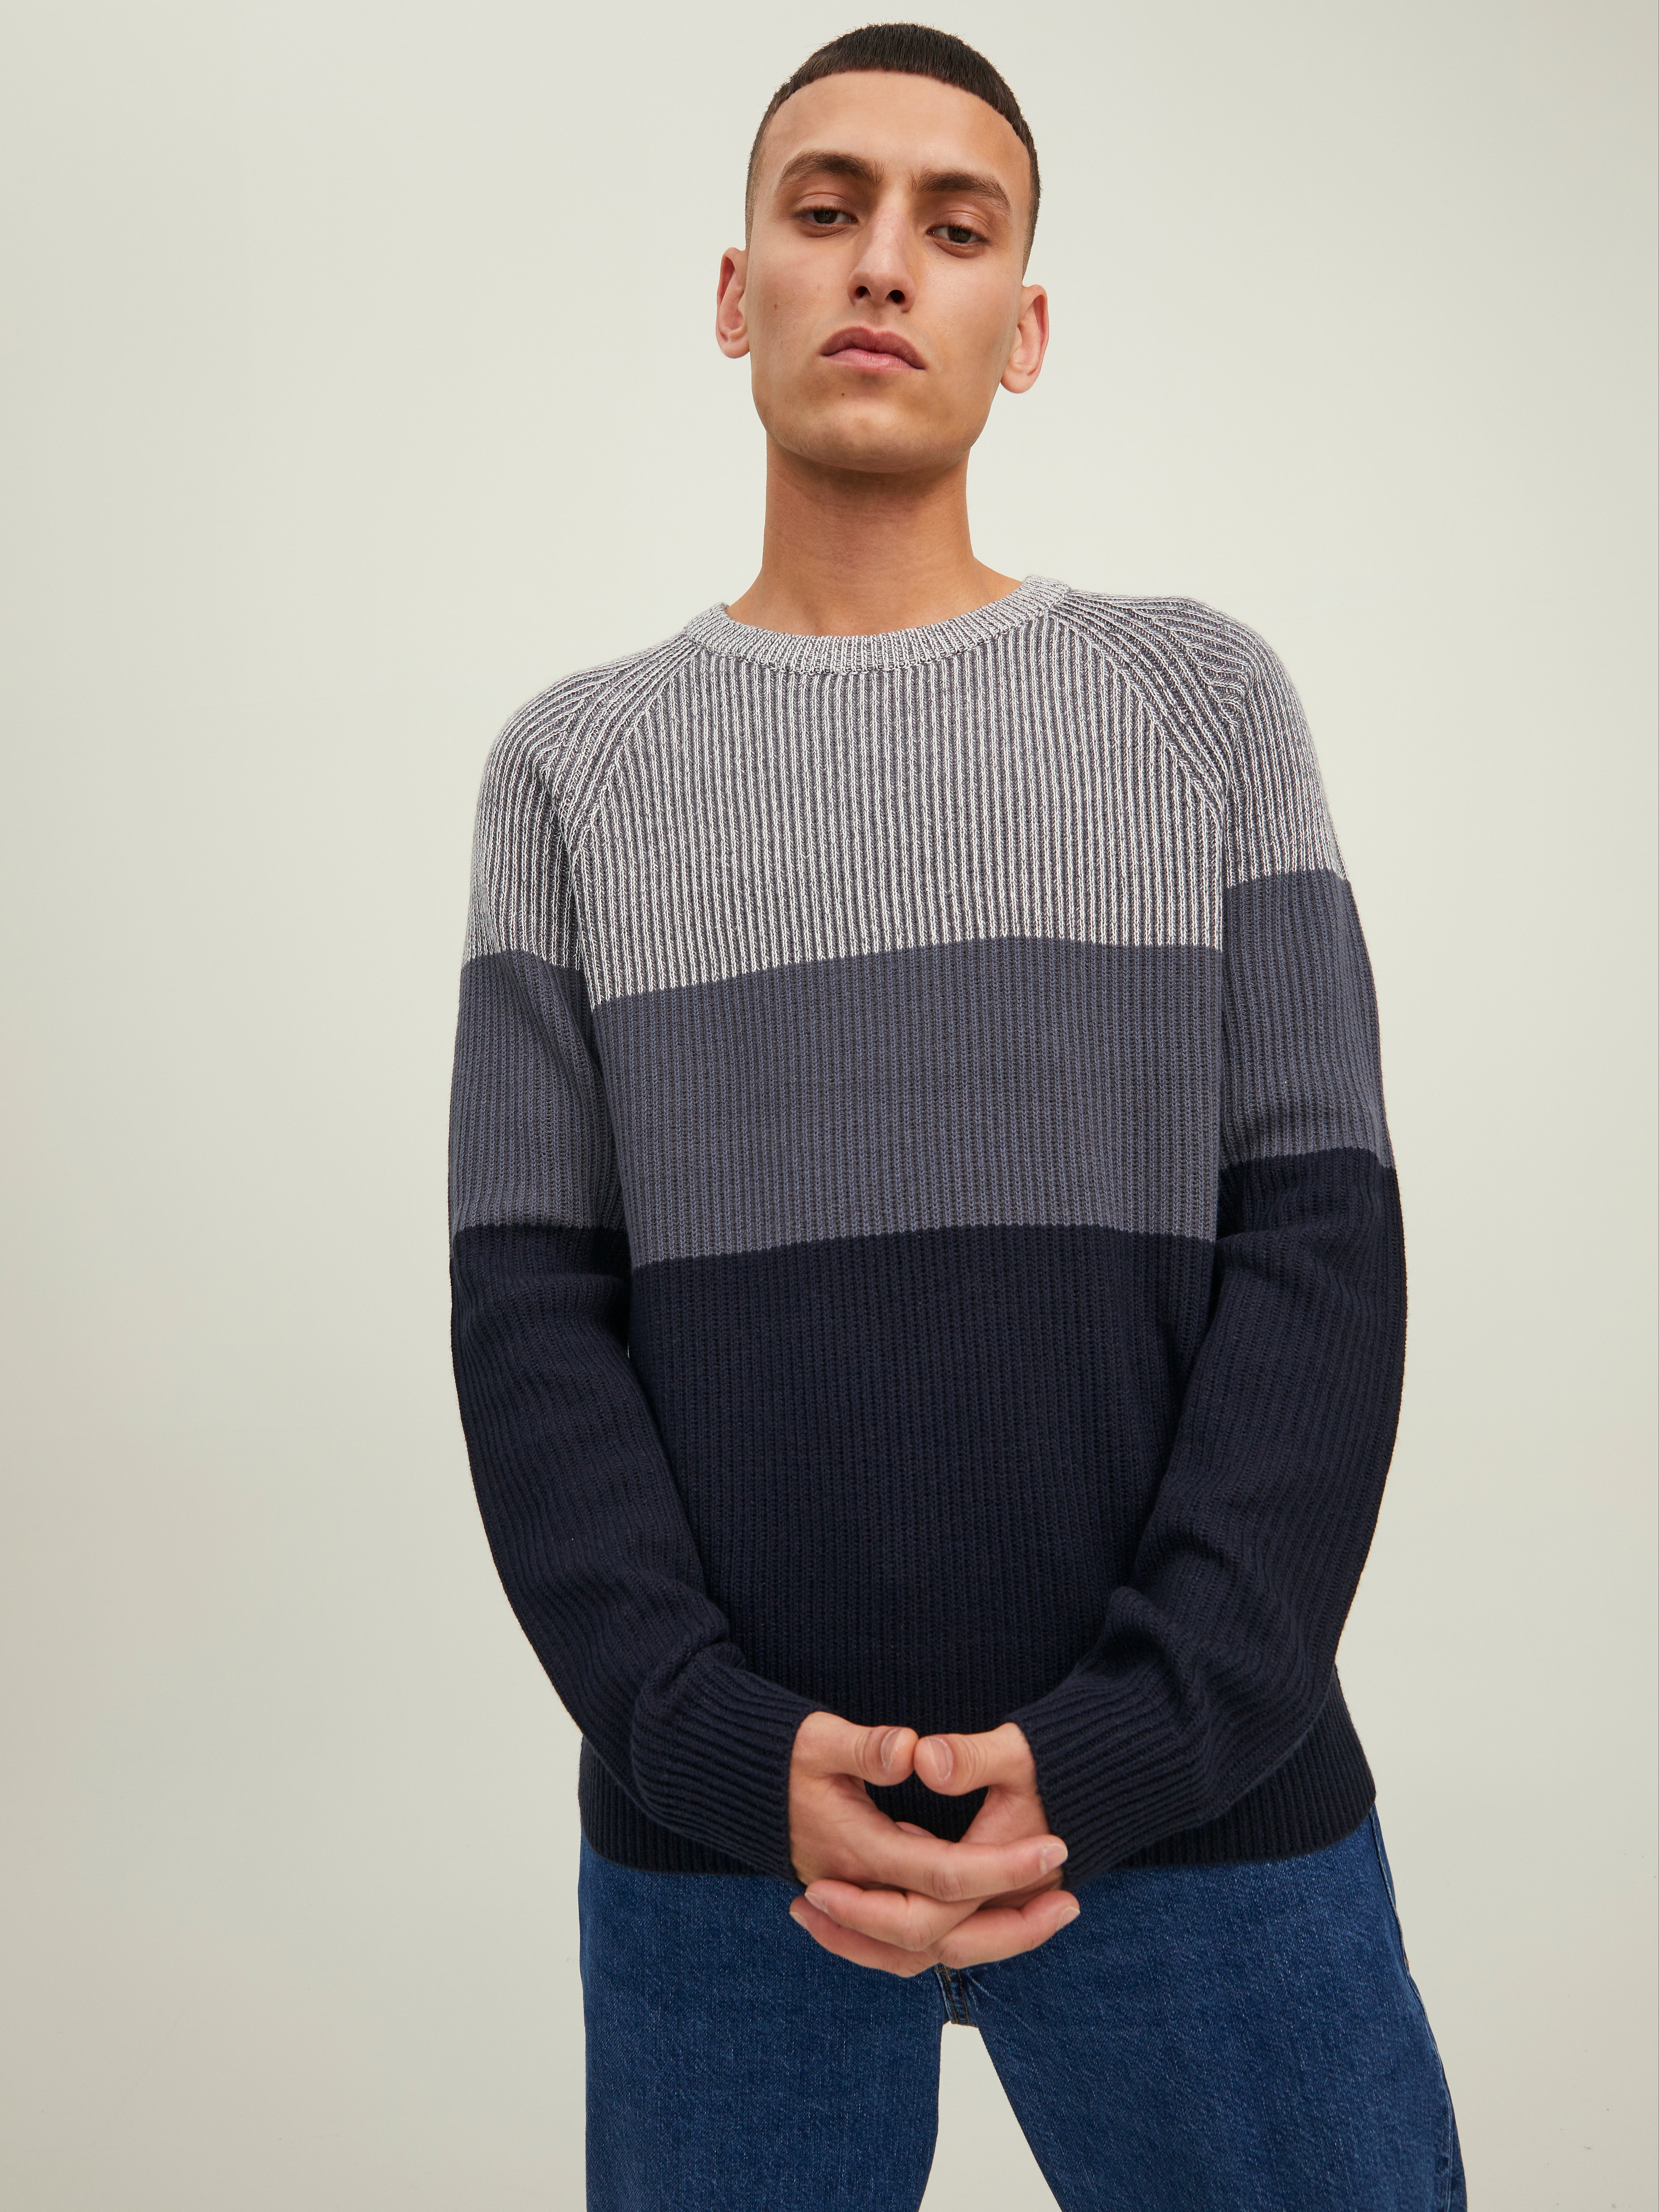 YOKE / Iregular Knitted Crewneck Sweater 激安新品大特価 www